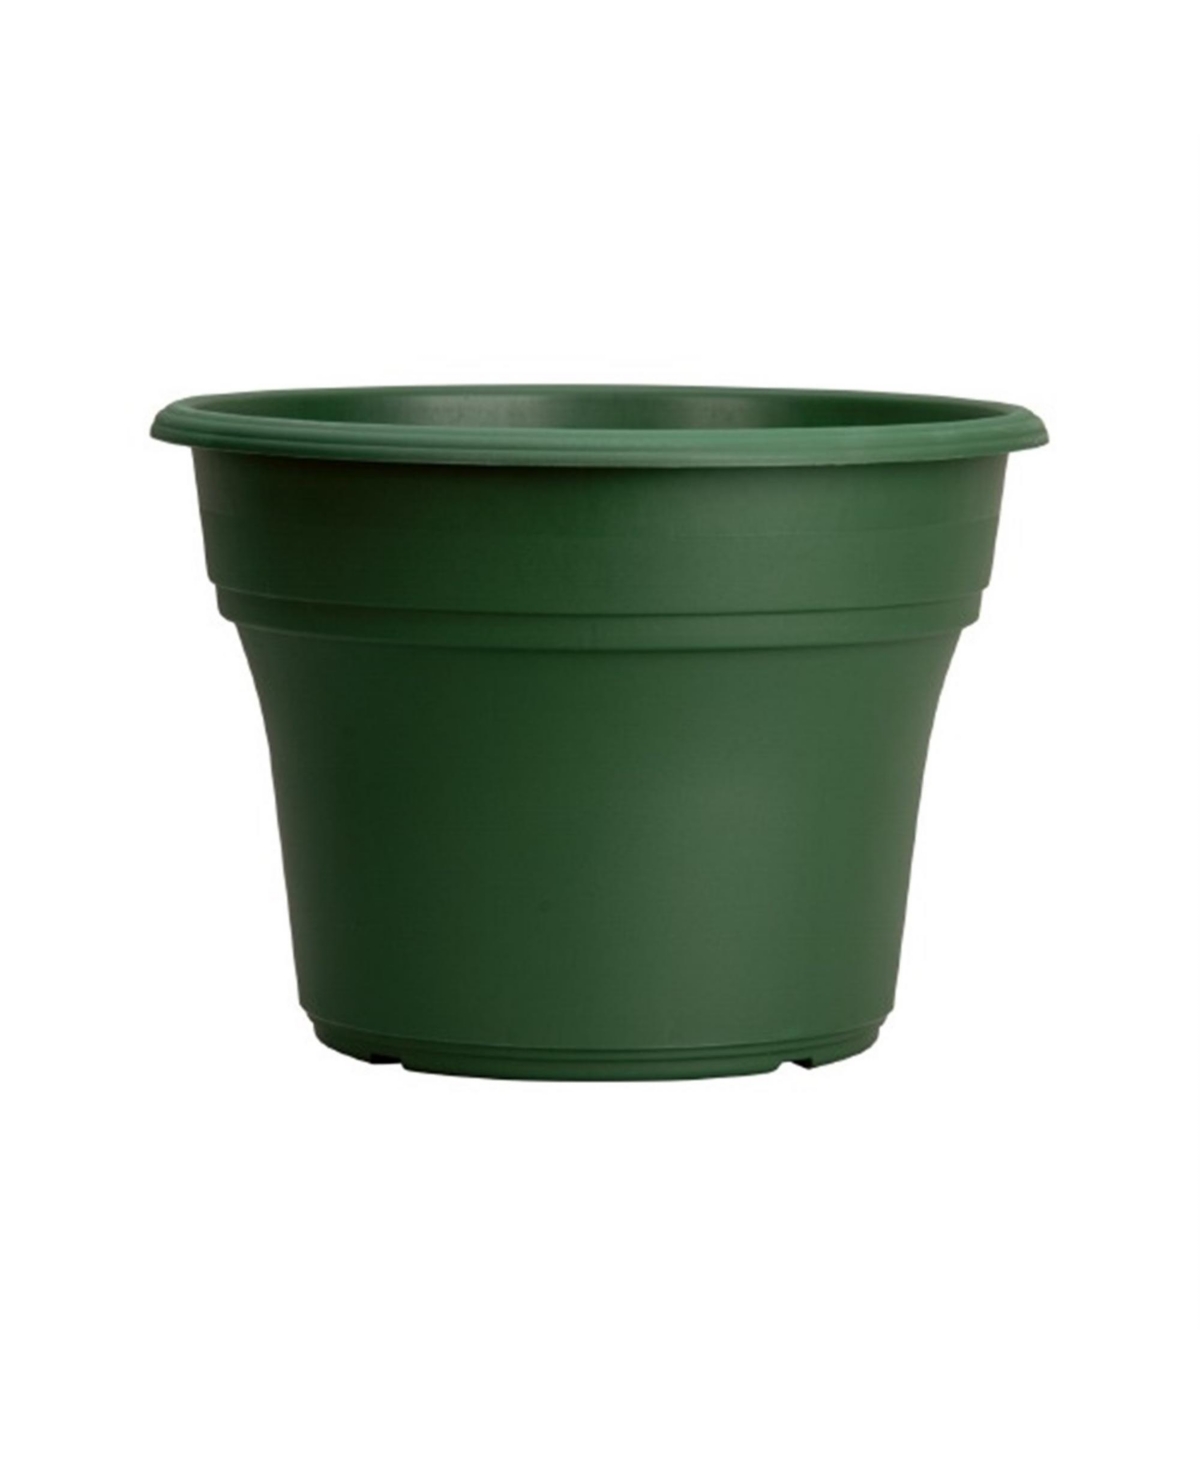 Hc Companies Plastic Flower Pot Planter for Outdoor Plants Green 6.69" - Green